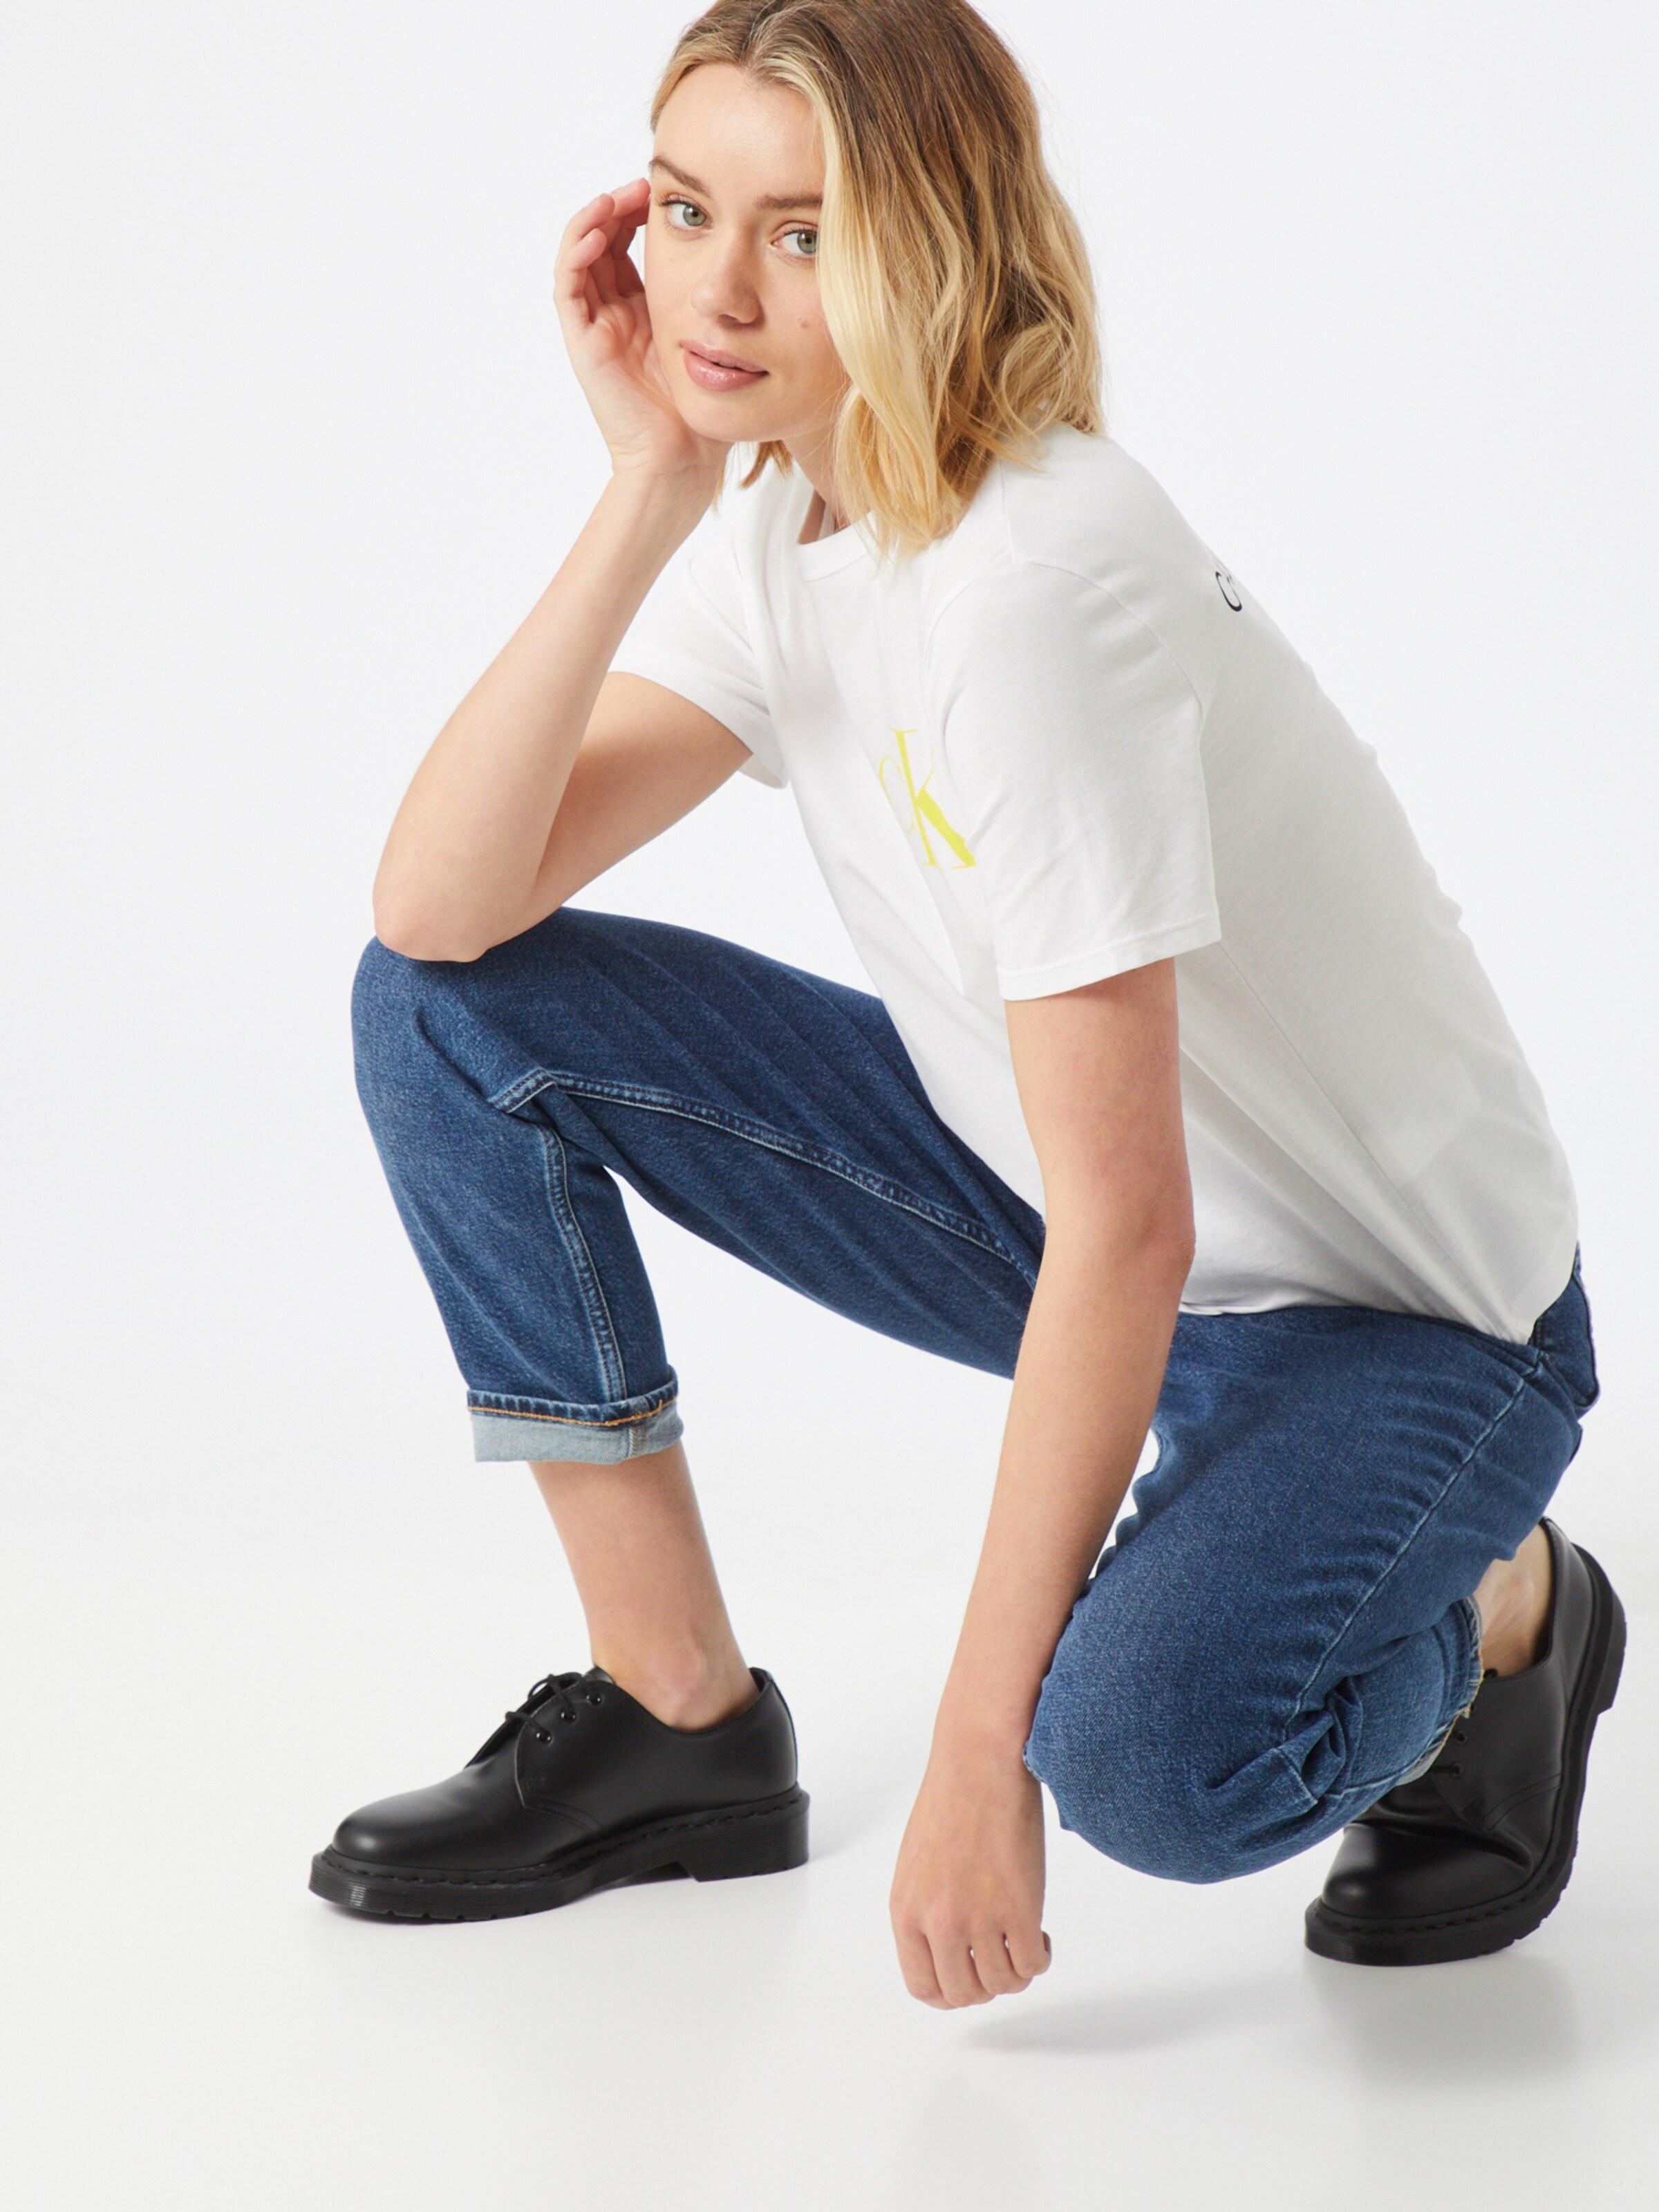 Vêtements T-shirt Calvin Klein Jeans en Blanc 